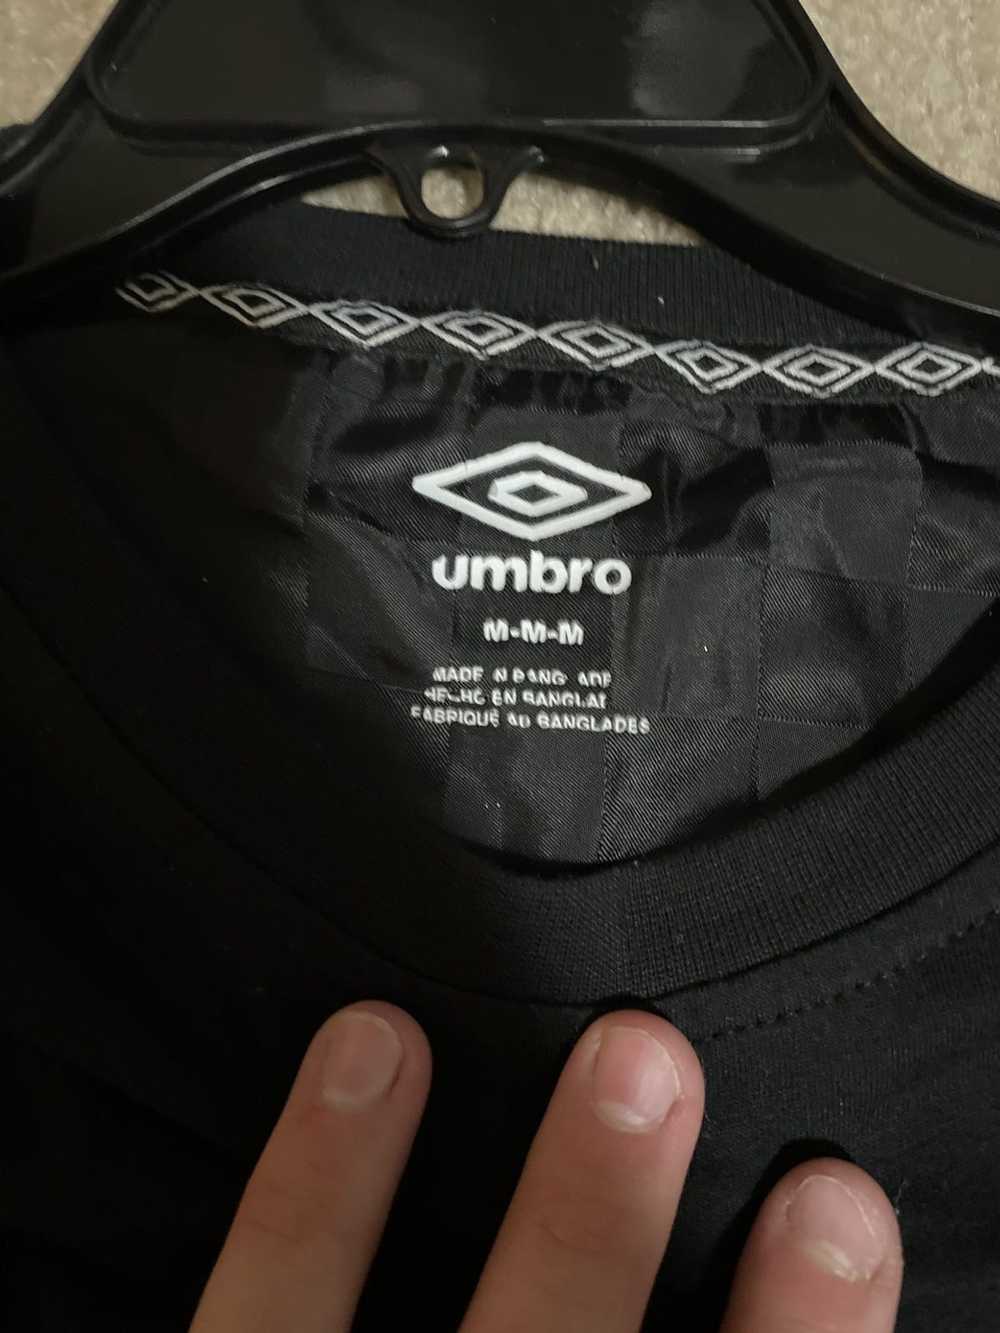 Umbro men’s umbro long sleeve t shirt - image 2